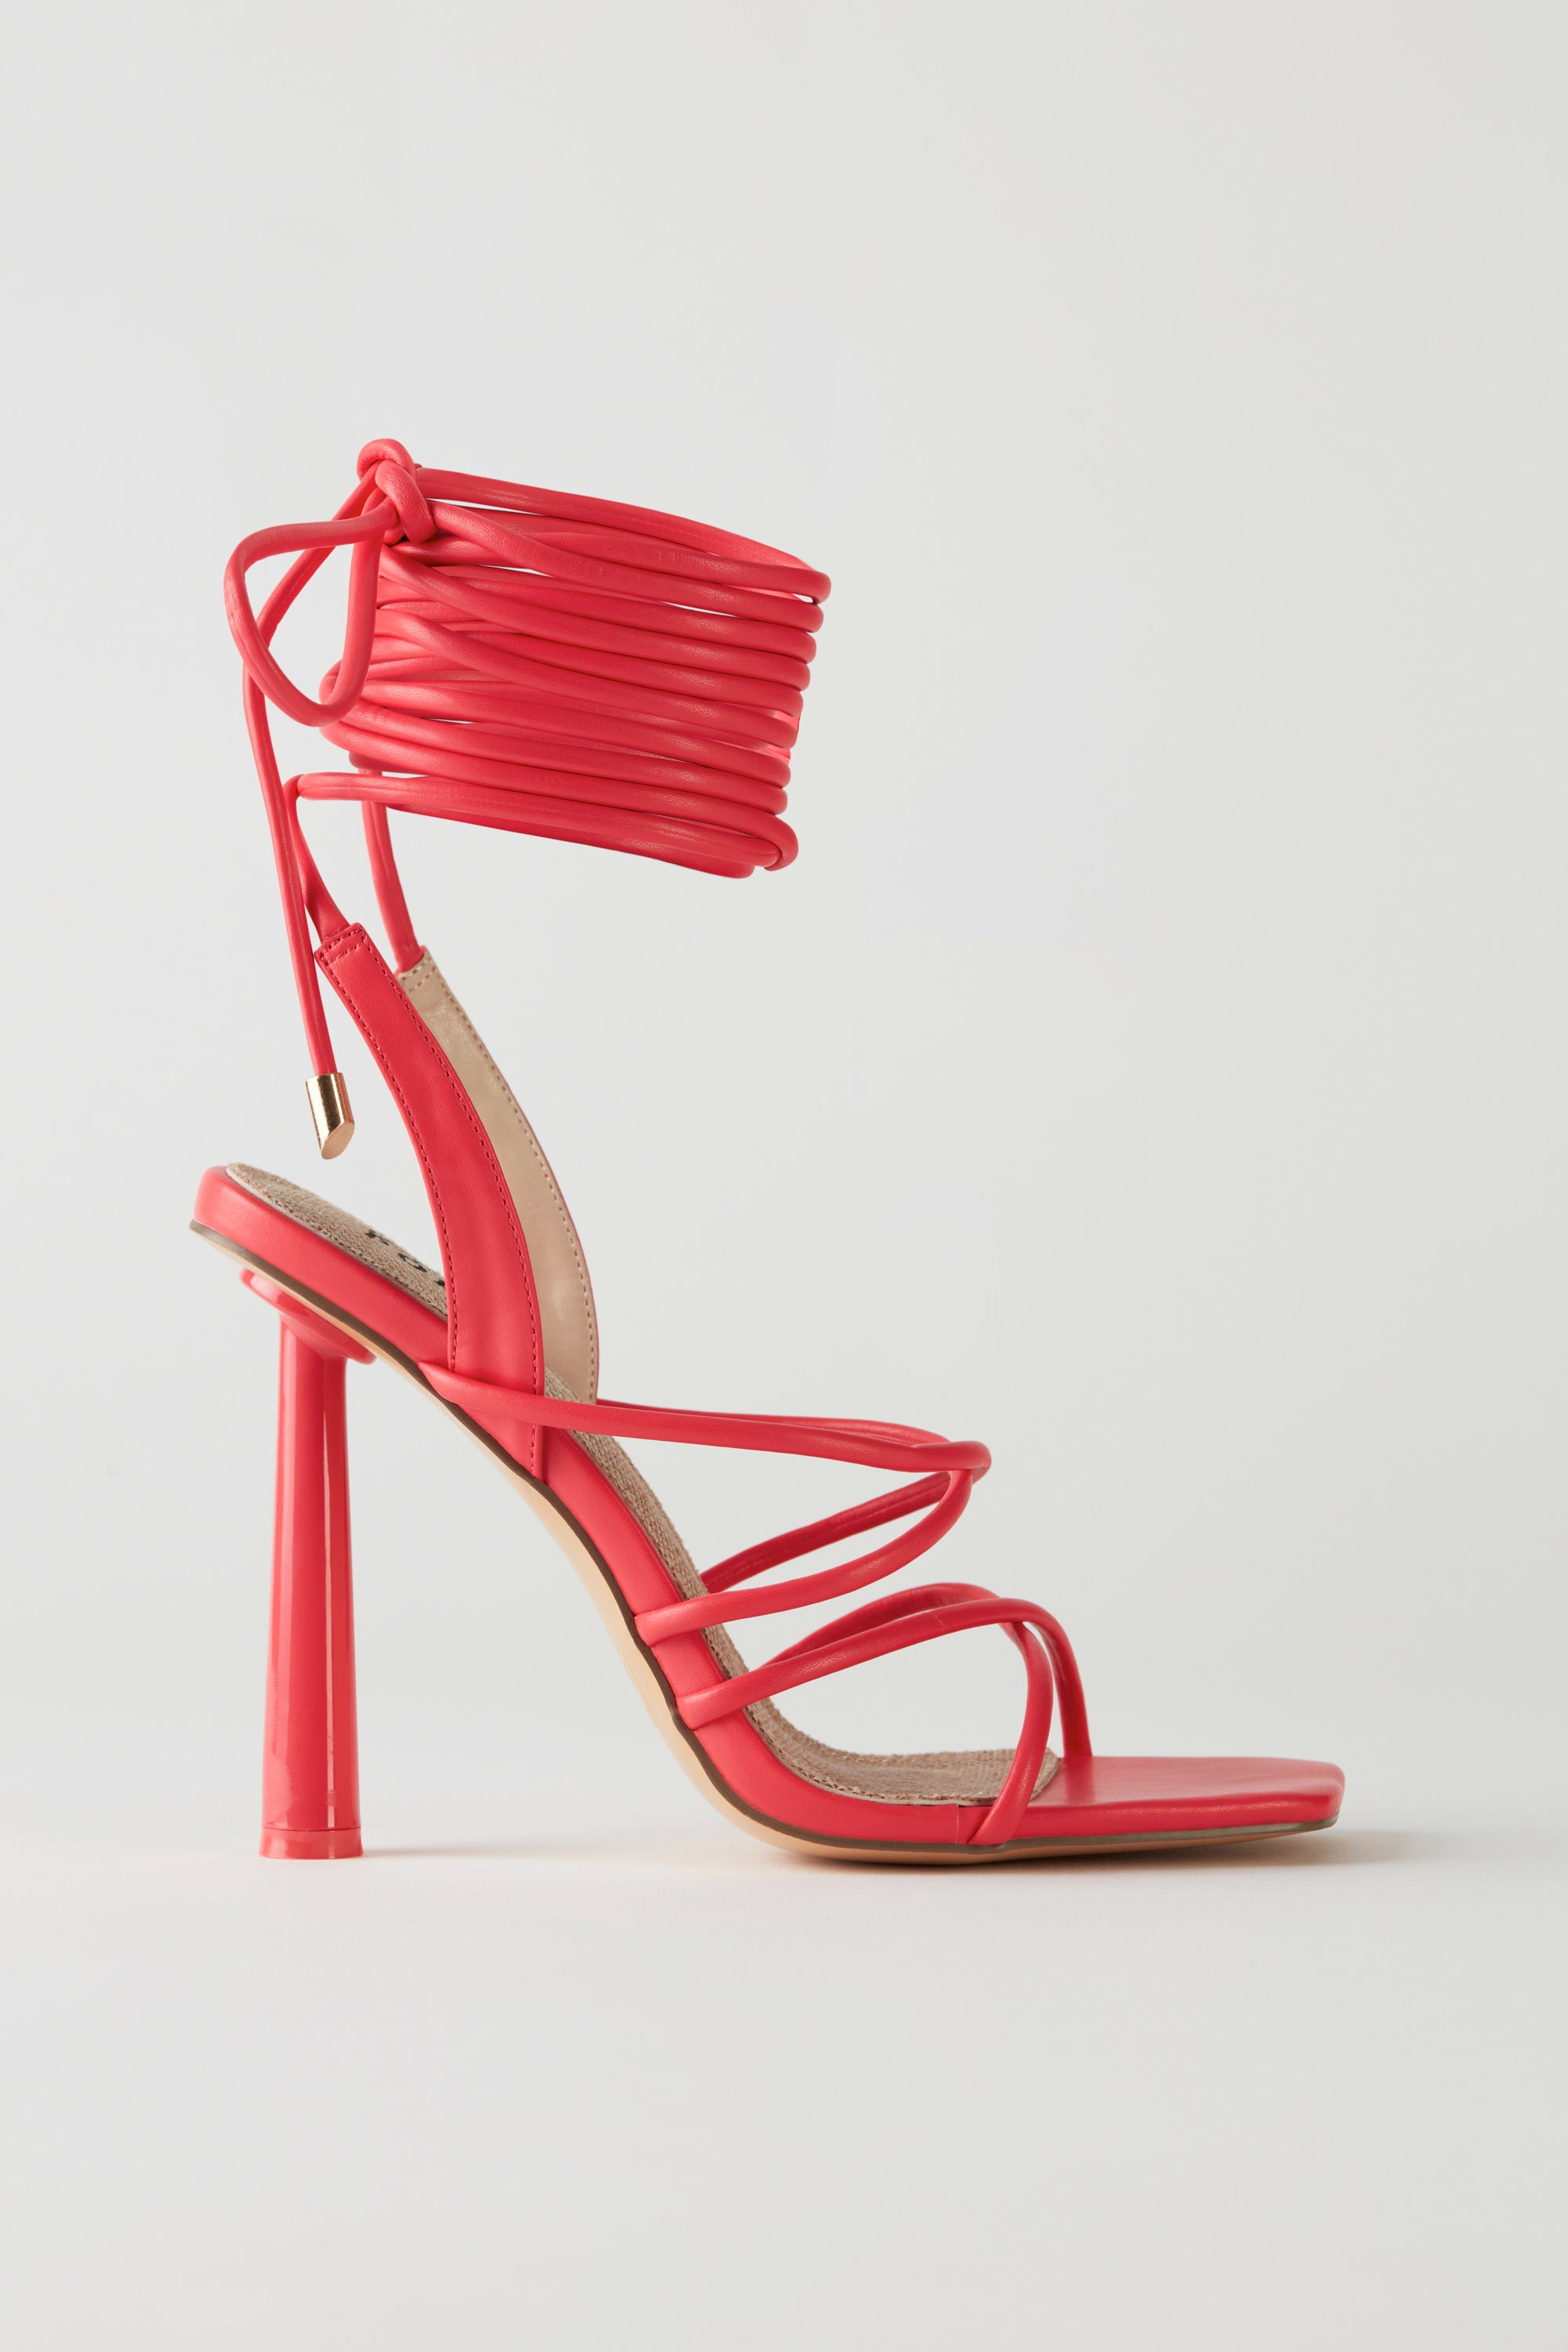 Zara brown tan lace up sandal heels | Lace up sandal heels, Sandals heels, Lace  up sandals